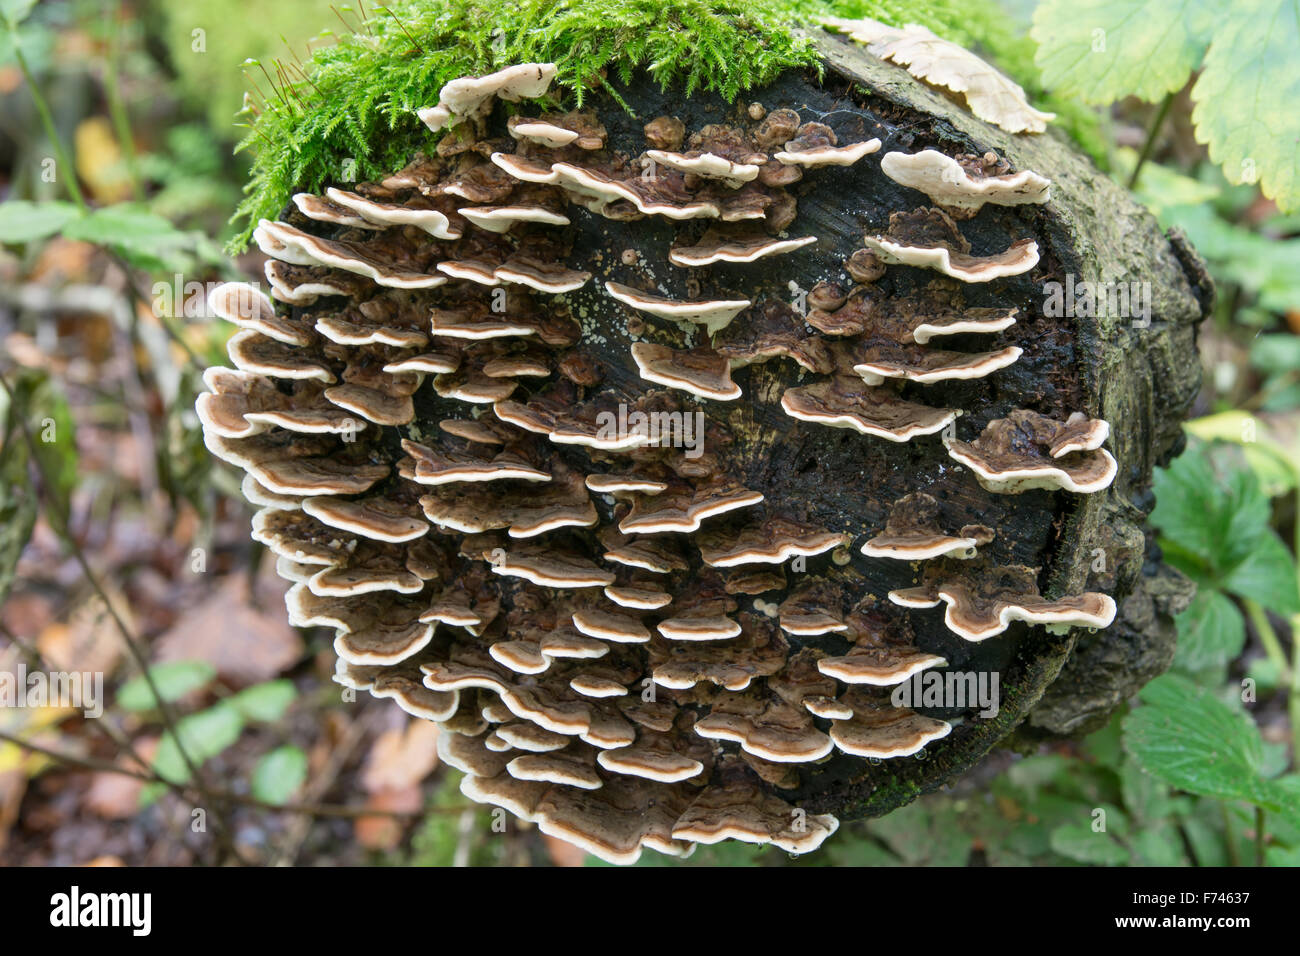 Bracket fungi - Trametes versicolor Stock Photo